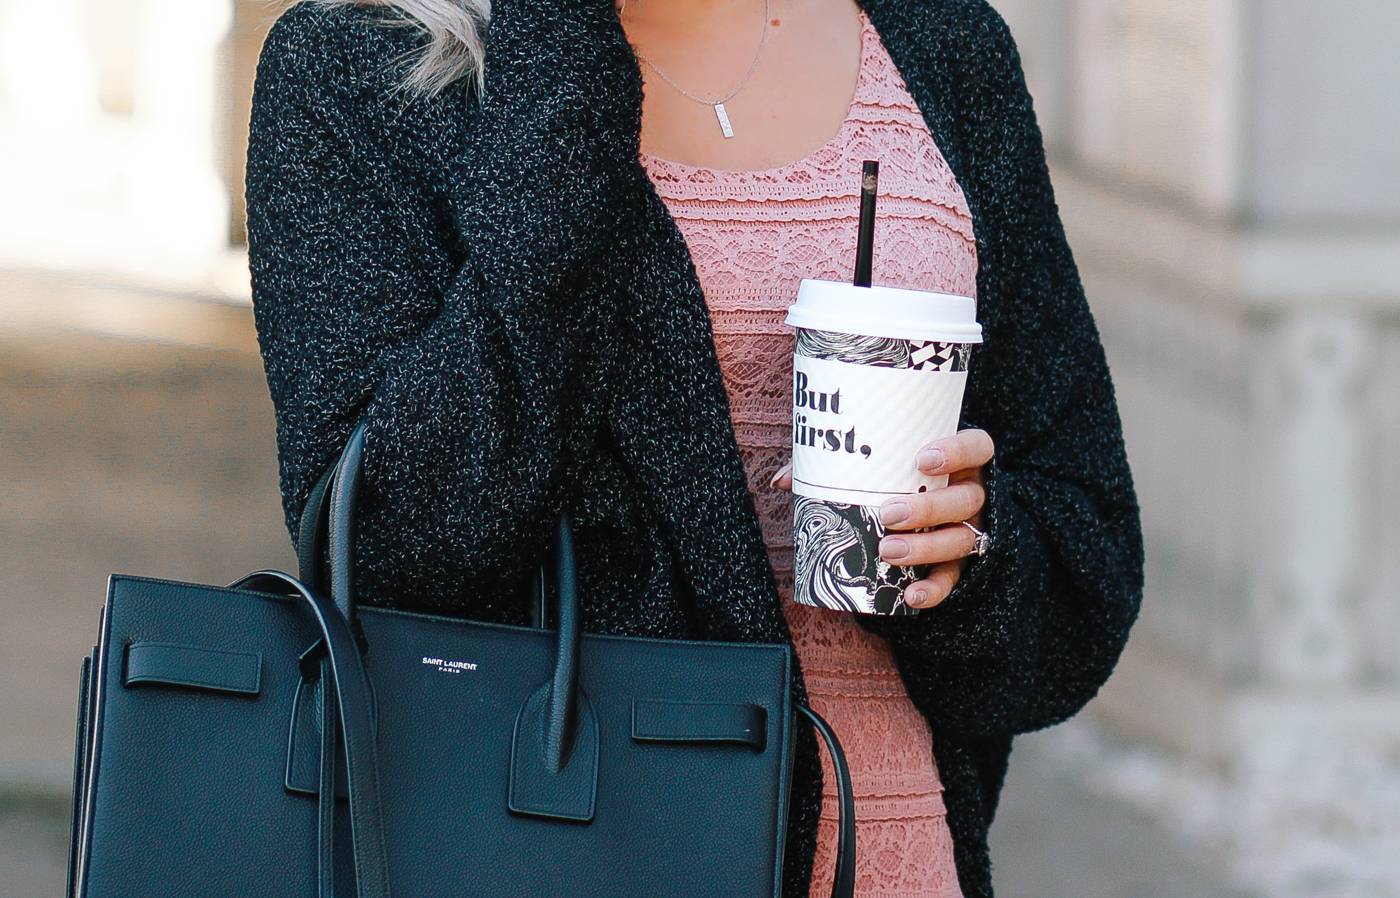 Blondie in the City | Dusty Rose Crochet Dress & @urbanooutfitters Cardigan | Saint Laurent Bag